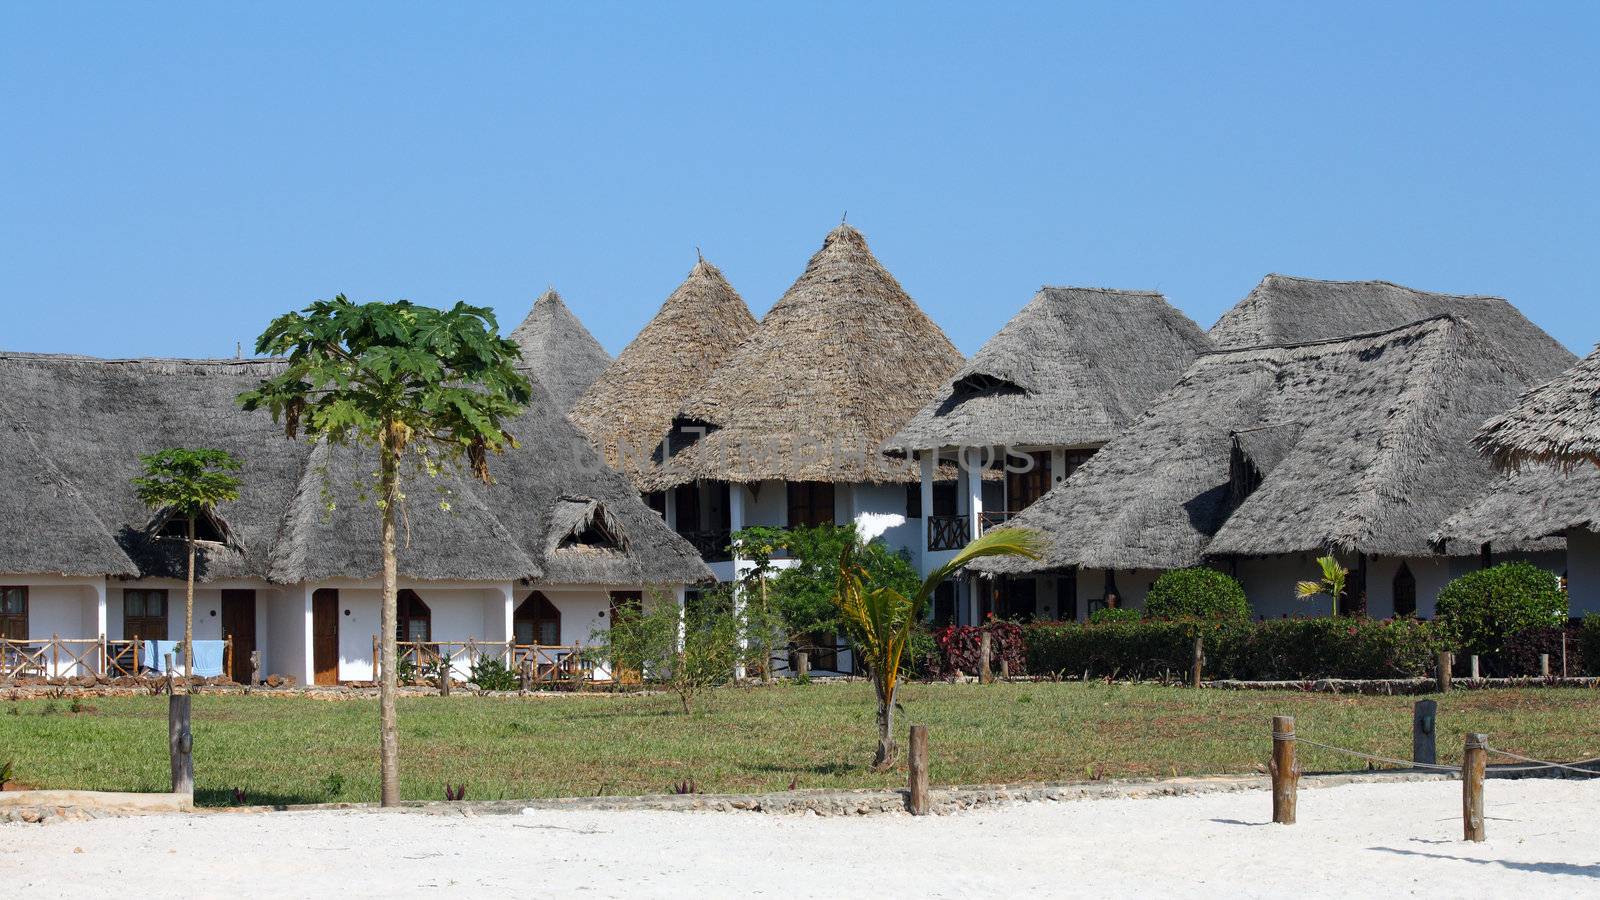 Bungalow resort in Zanzibar by landon